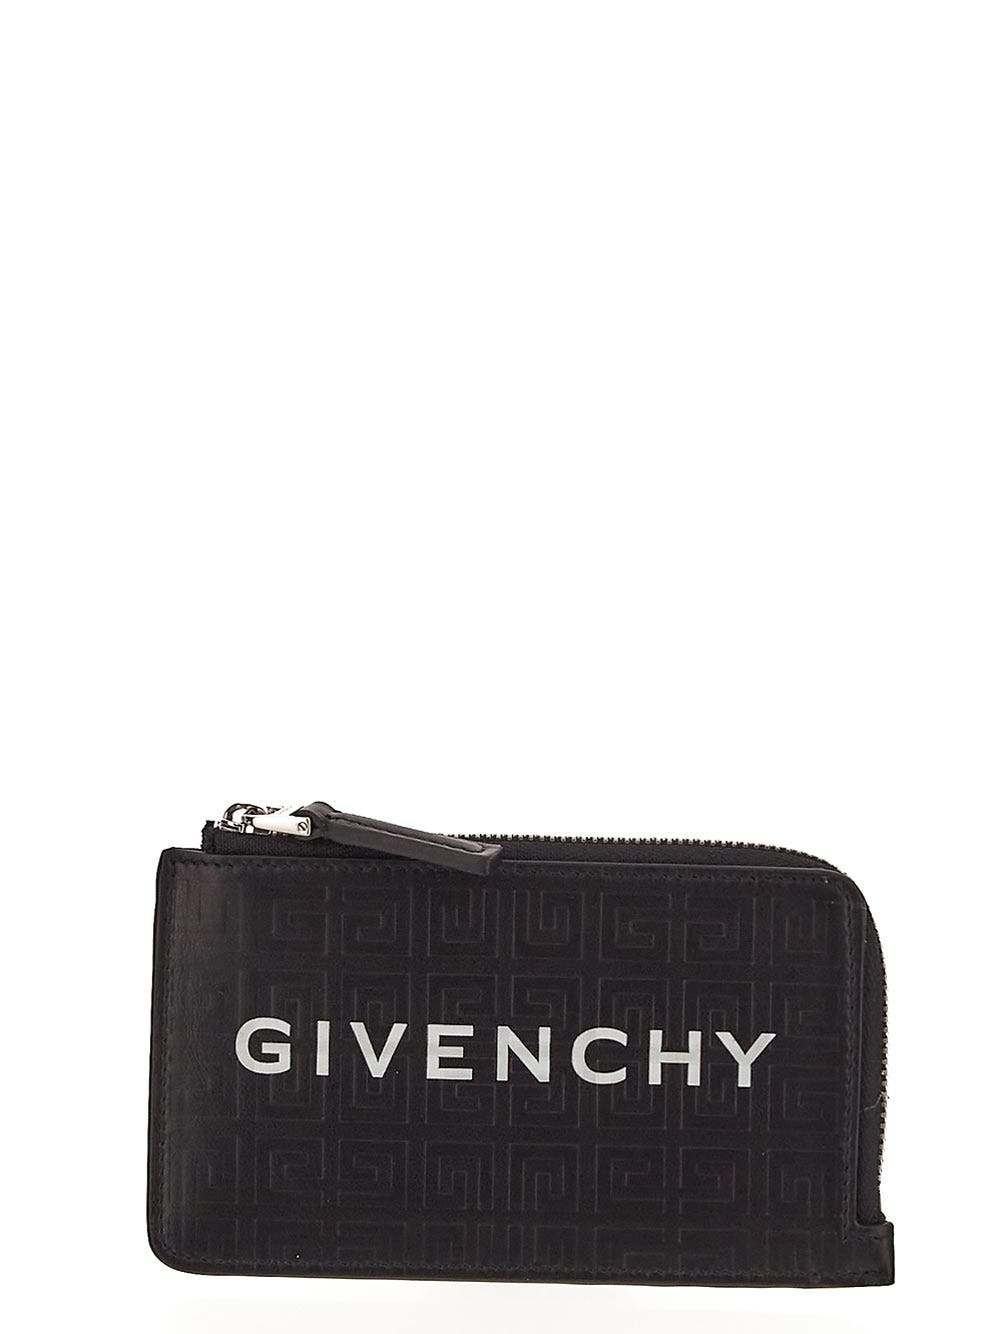 Photo: Givenchy Logo Wallet